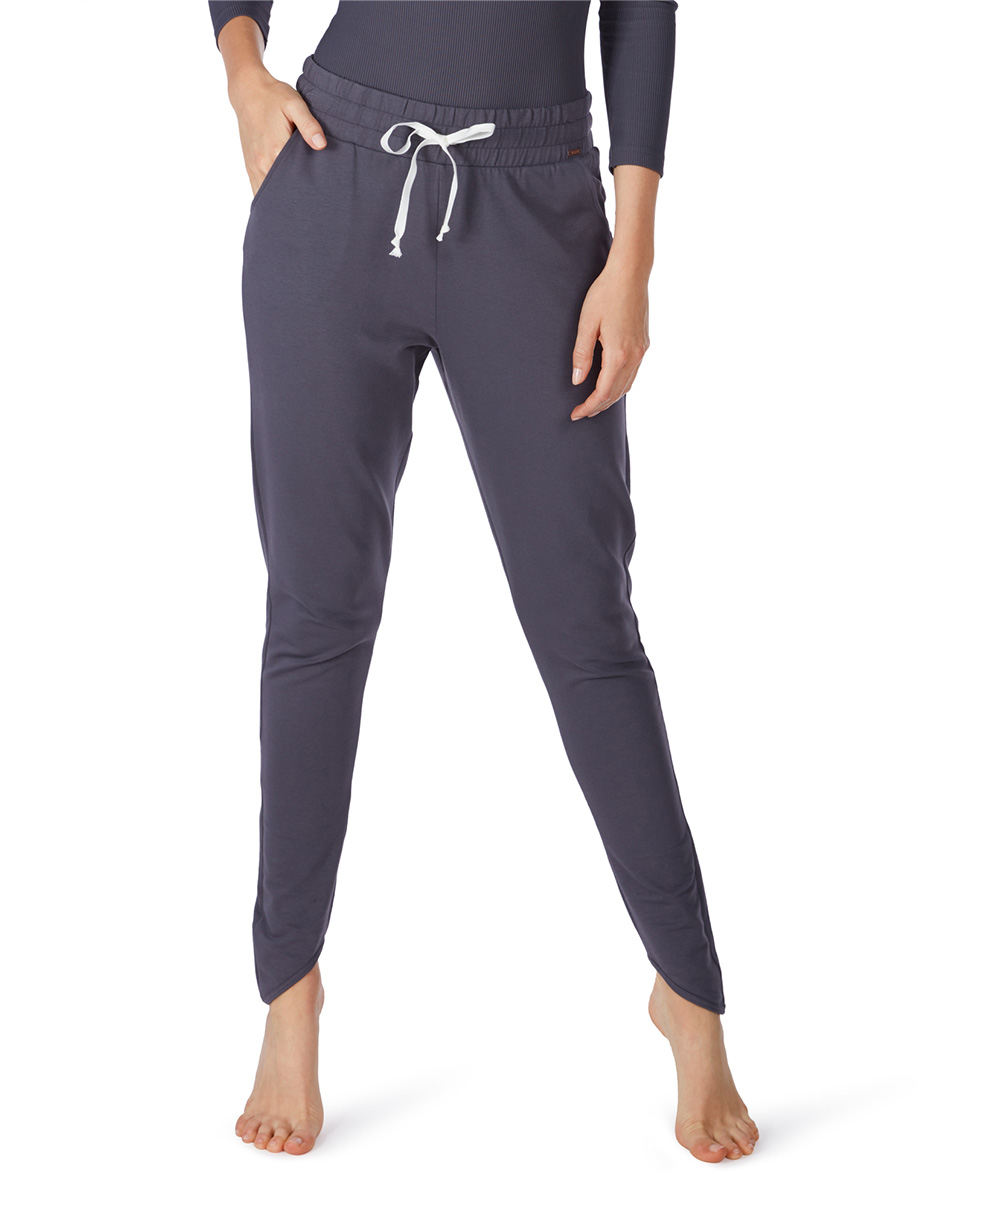 Pantalon gris femme Loungewear femme Skiny S-084030-0576